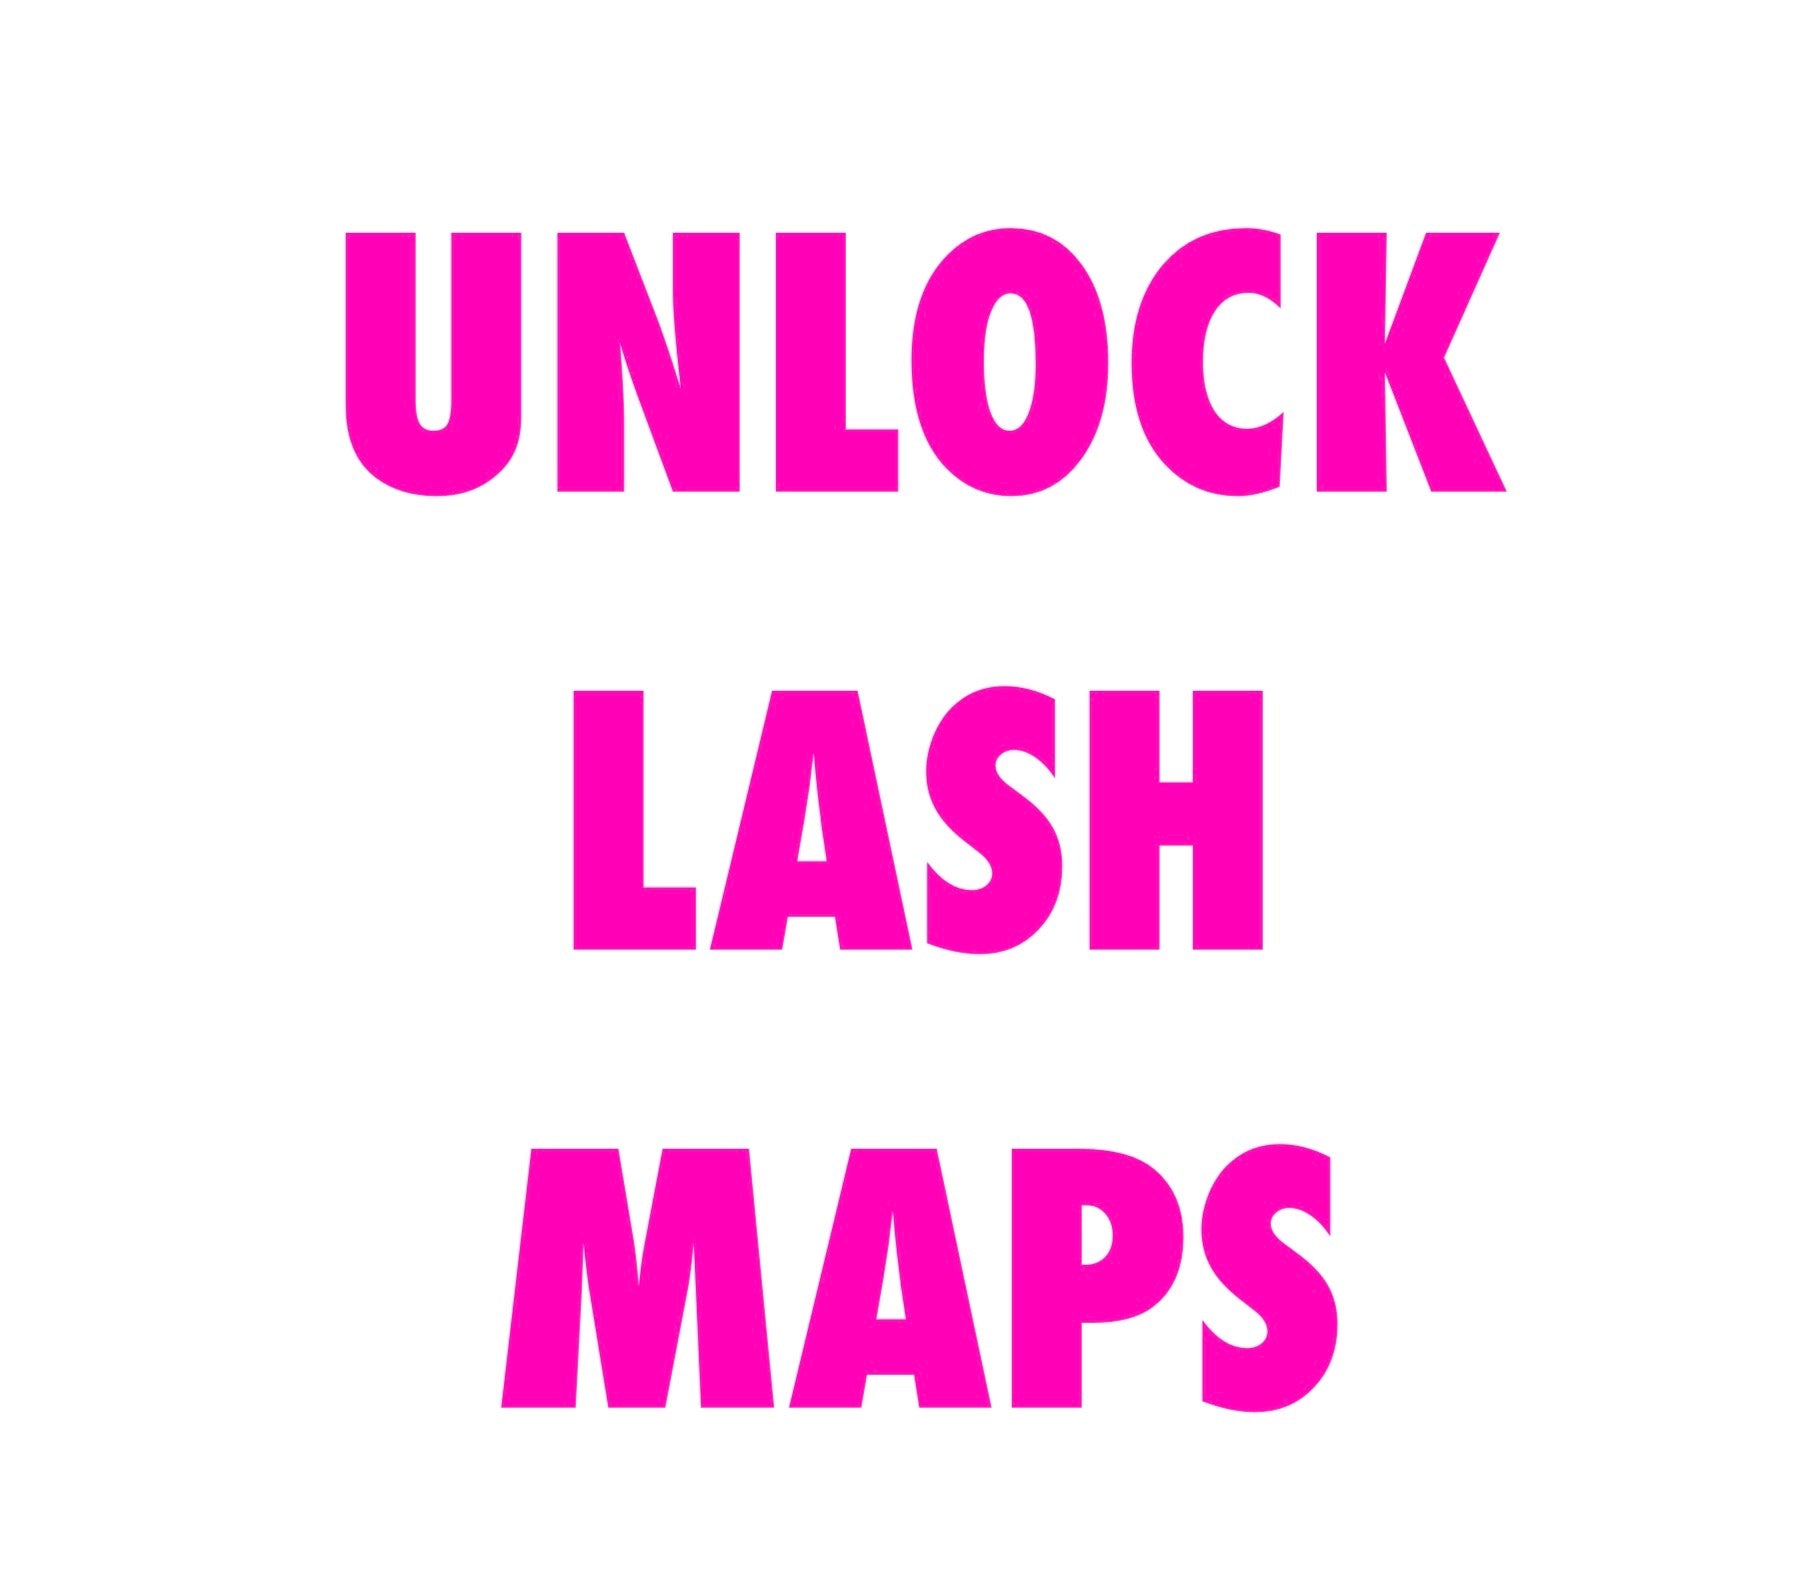 10 Lash Maps